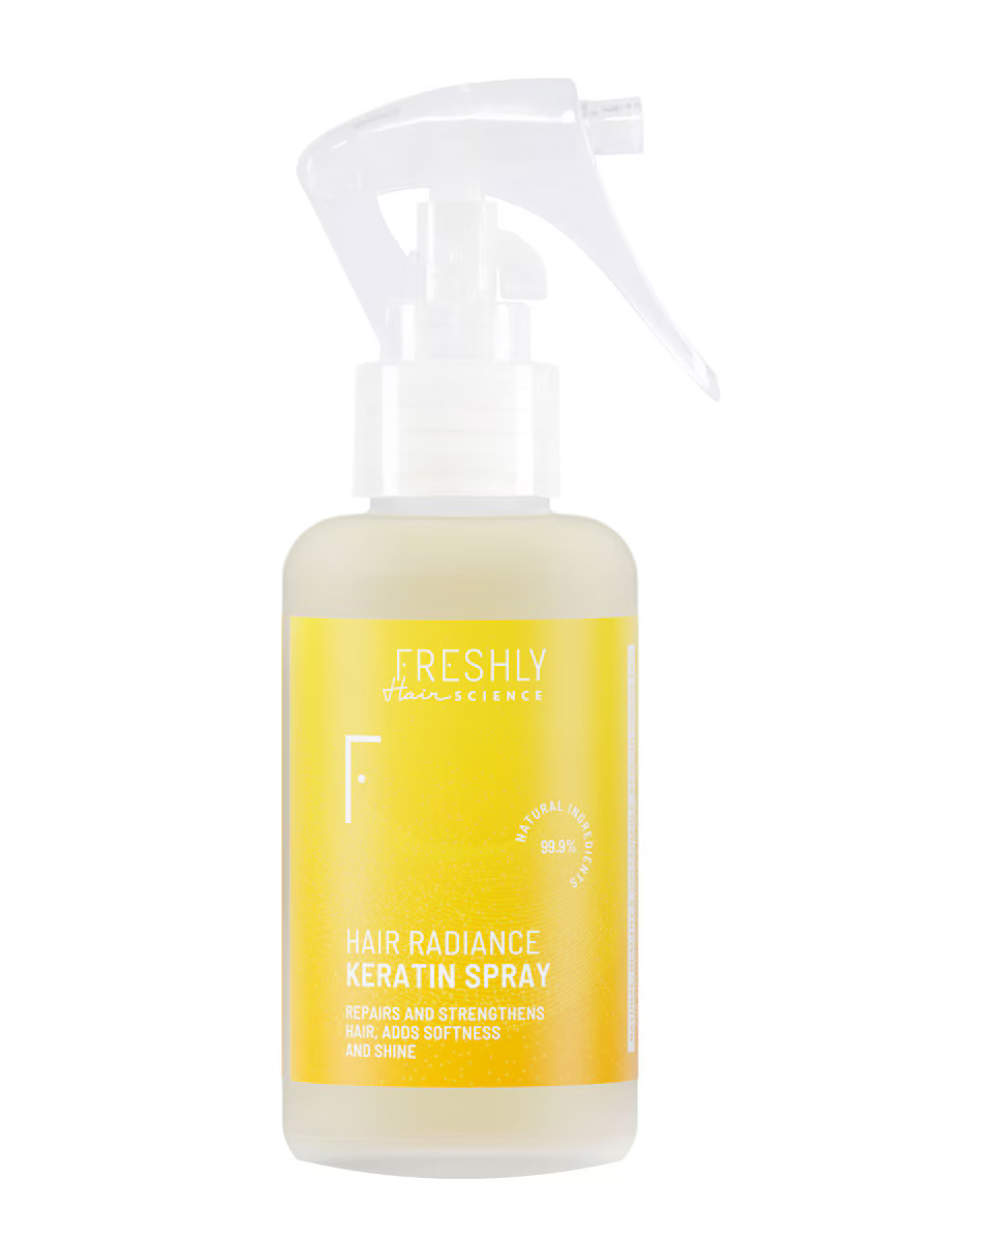 Hair Radiance Keratin Spray de Freshly